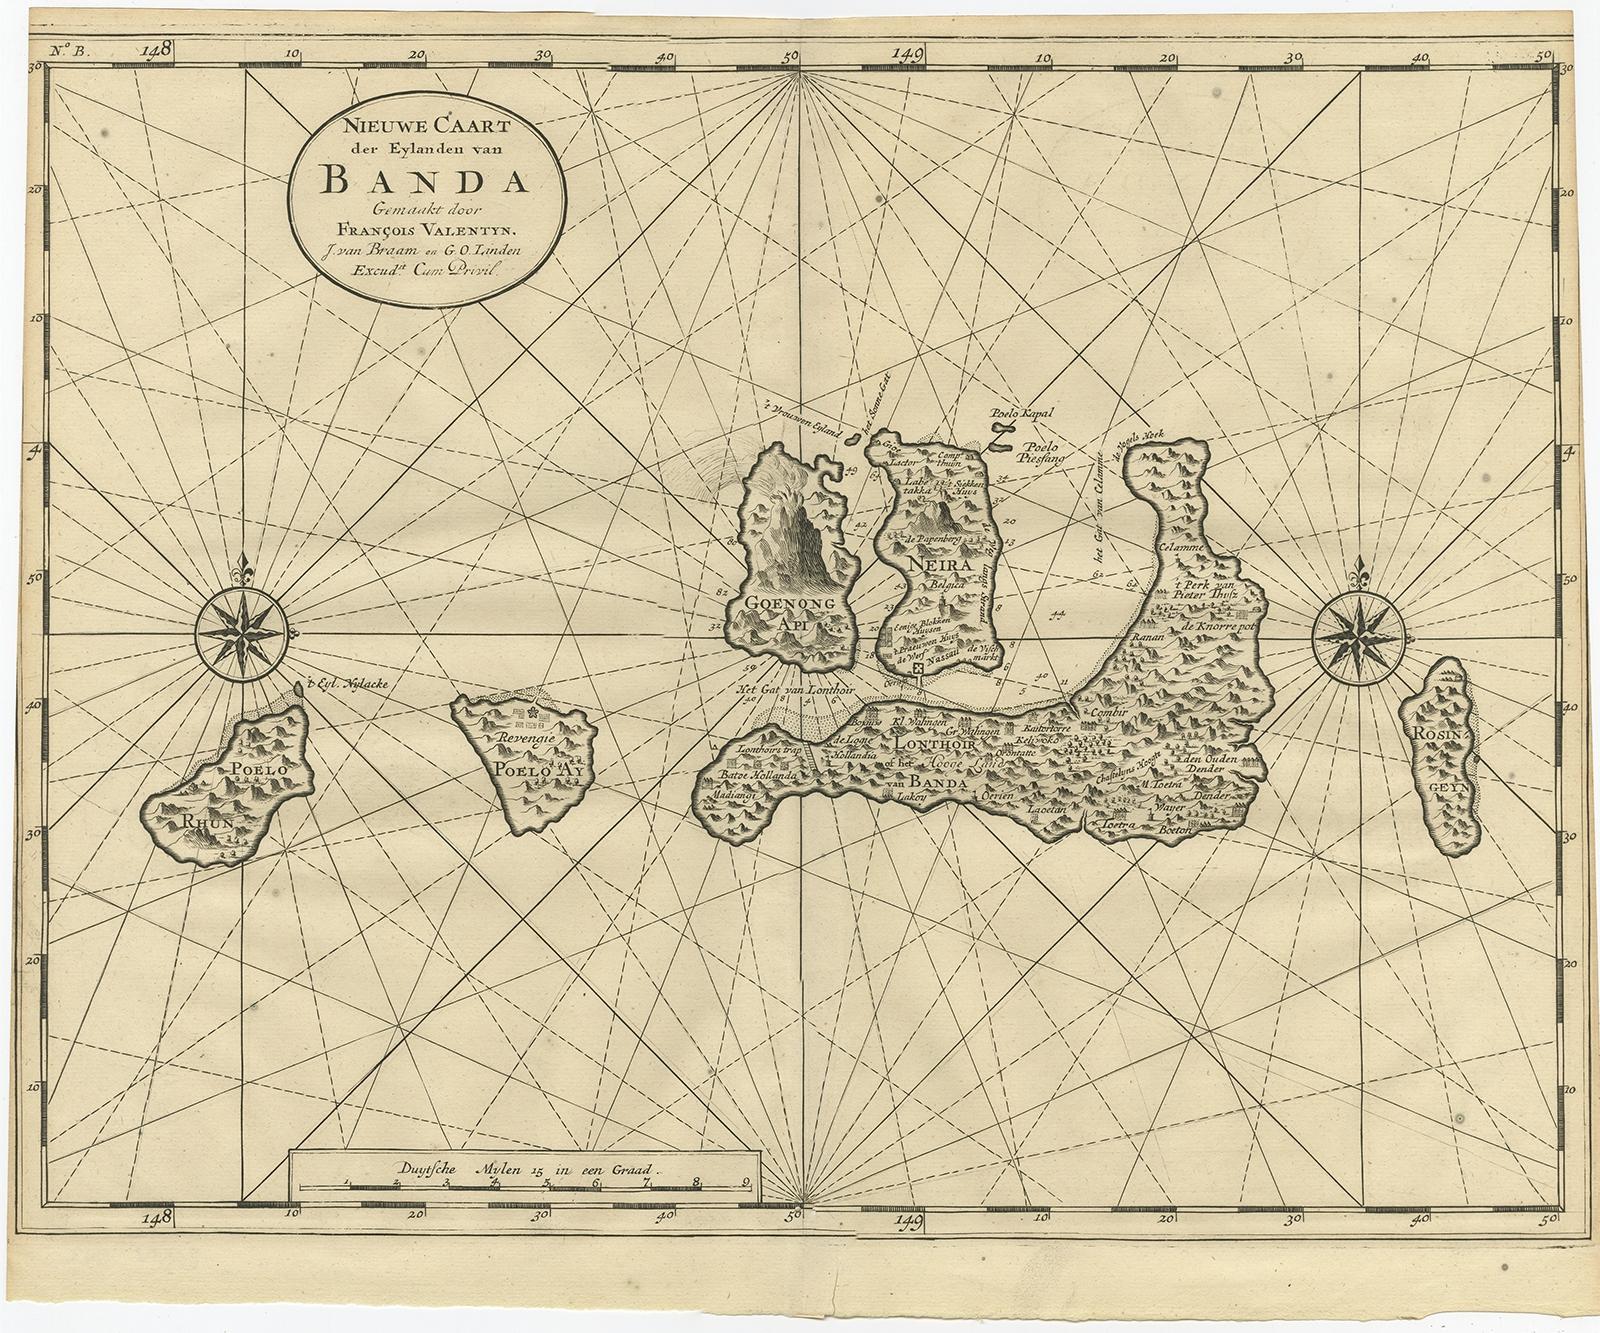 Antique map titled 'Nieuwe Caart der Eylanden van Banda'. 

Beautiful chart of the Banda Islands including Banda Api, Banda Neira, Banda Besar, Pulau Hatta (Rosengain), Pulau Ai and Pulau Run. This print originates from 'Oud en Nieuw Oost-Indiën'